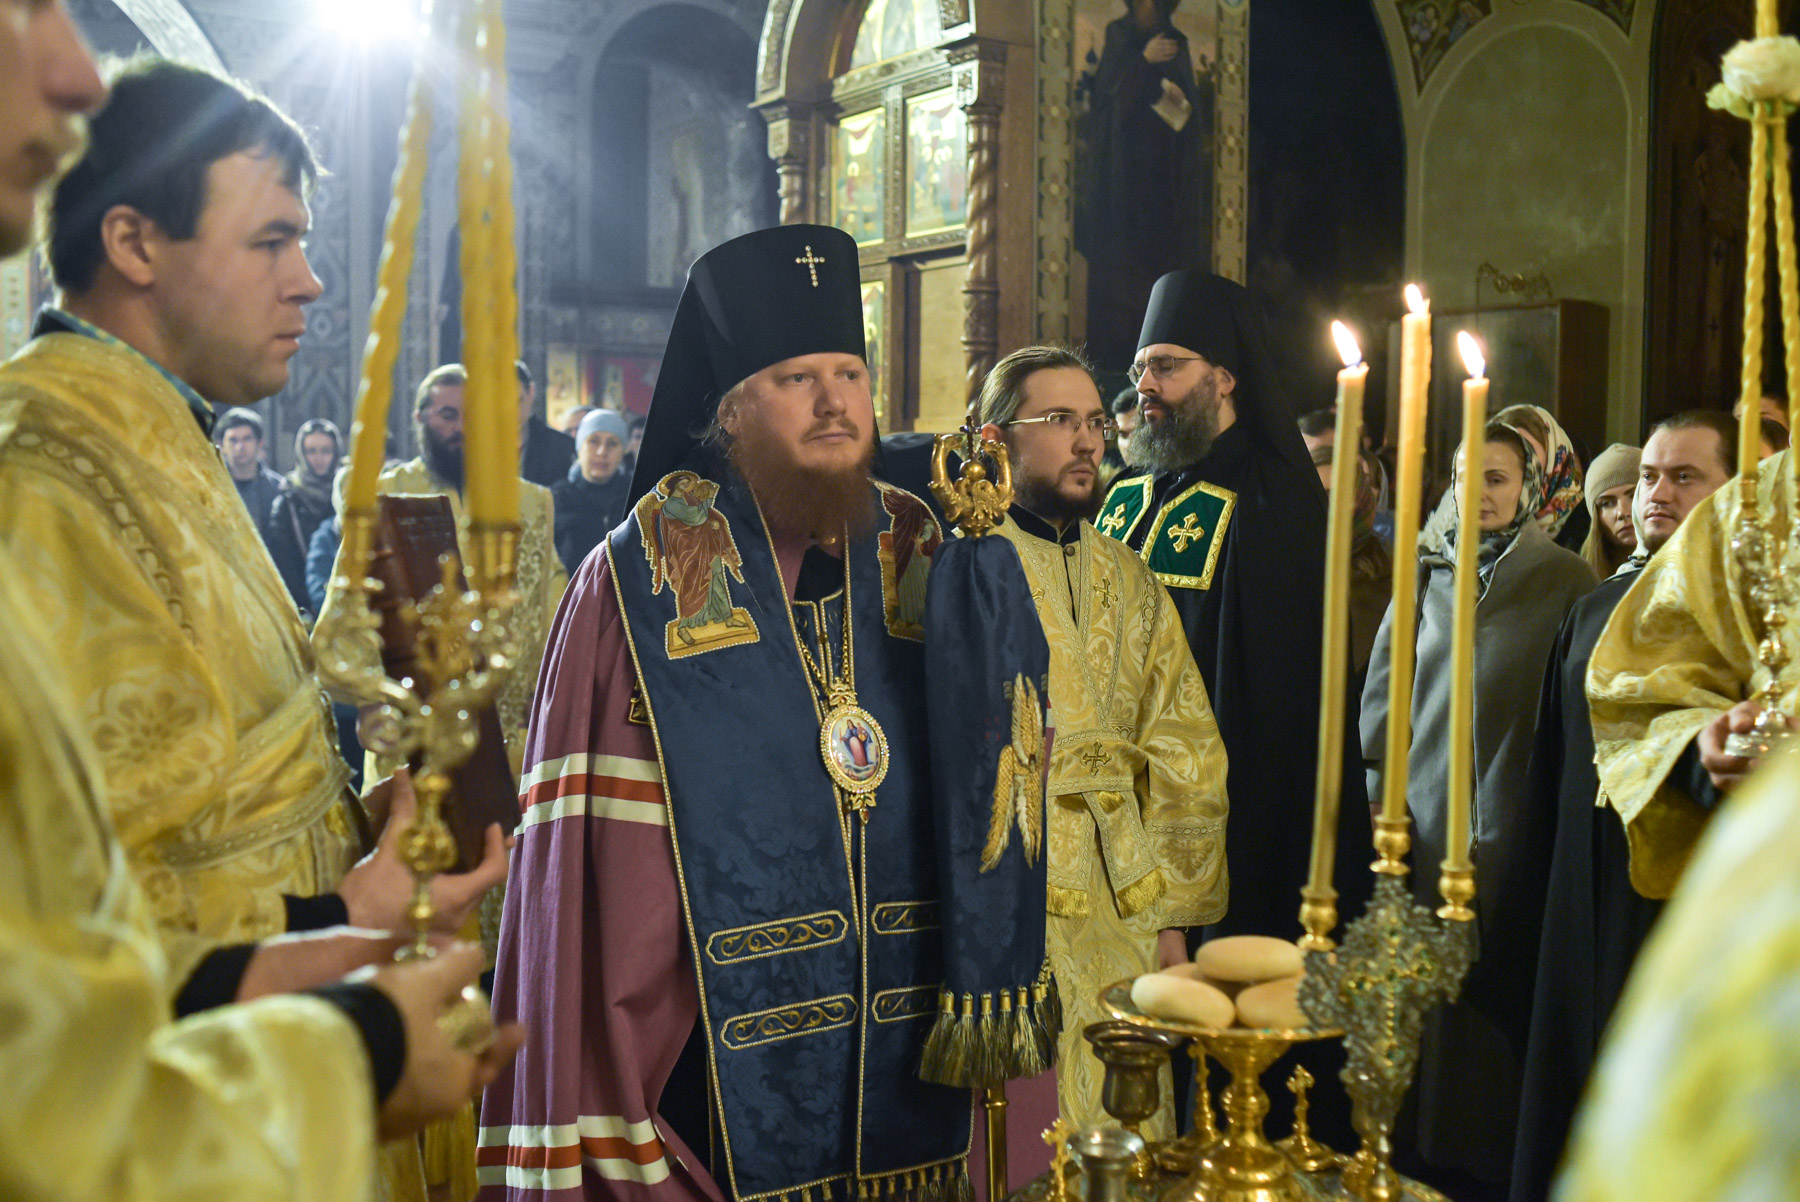 photos of orthodox christmas 0123